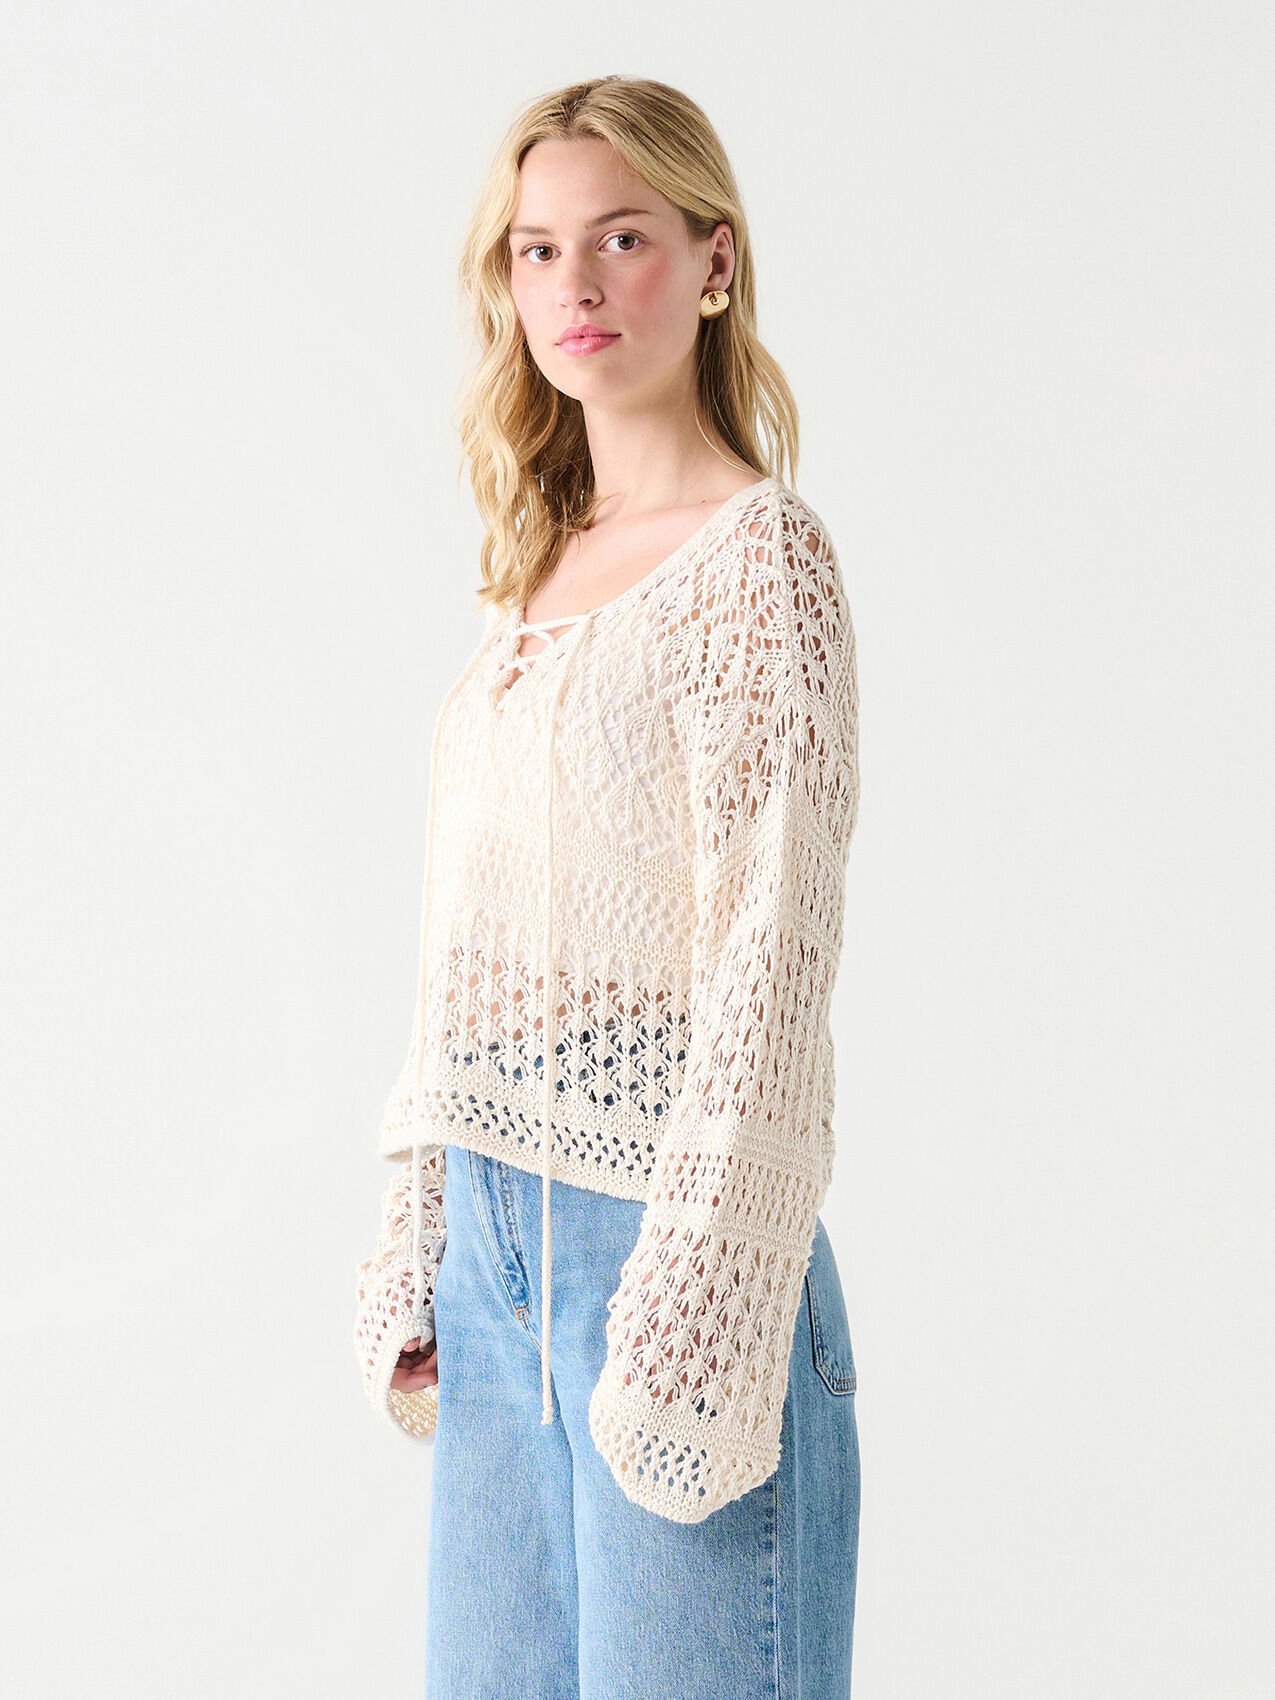 Long Sleeve Lace-Up Crochet Sweater by Dex